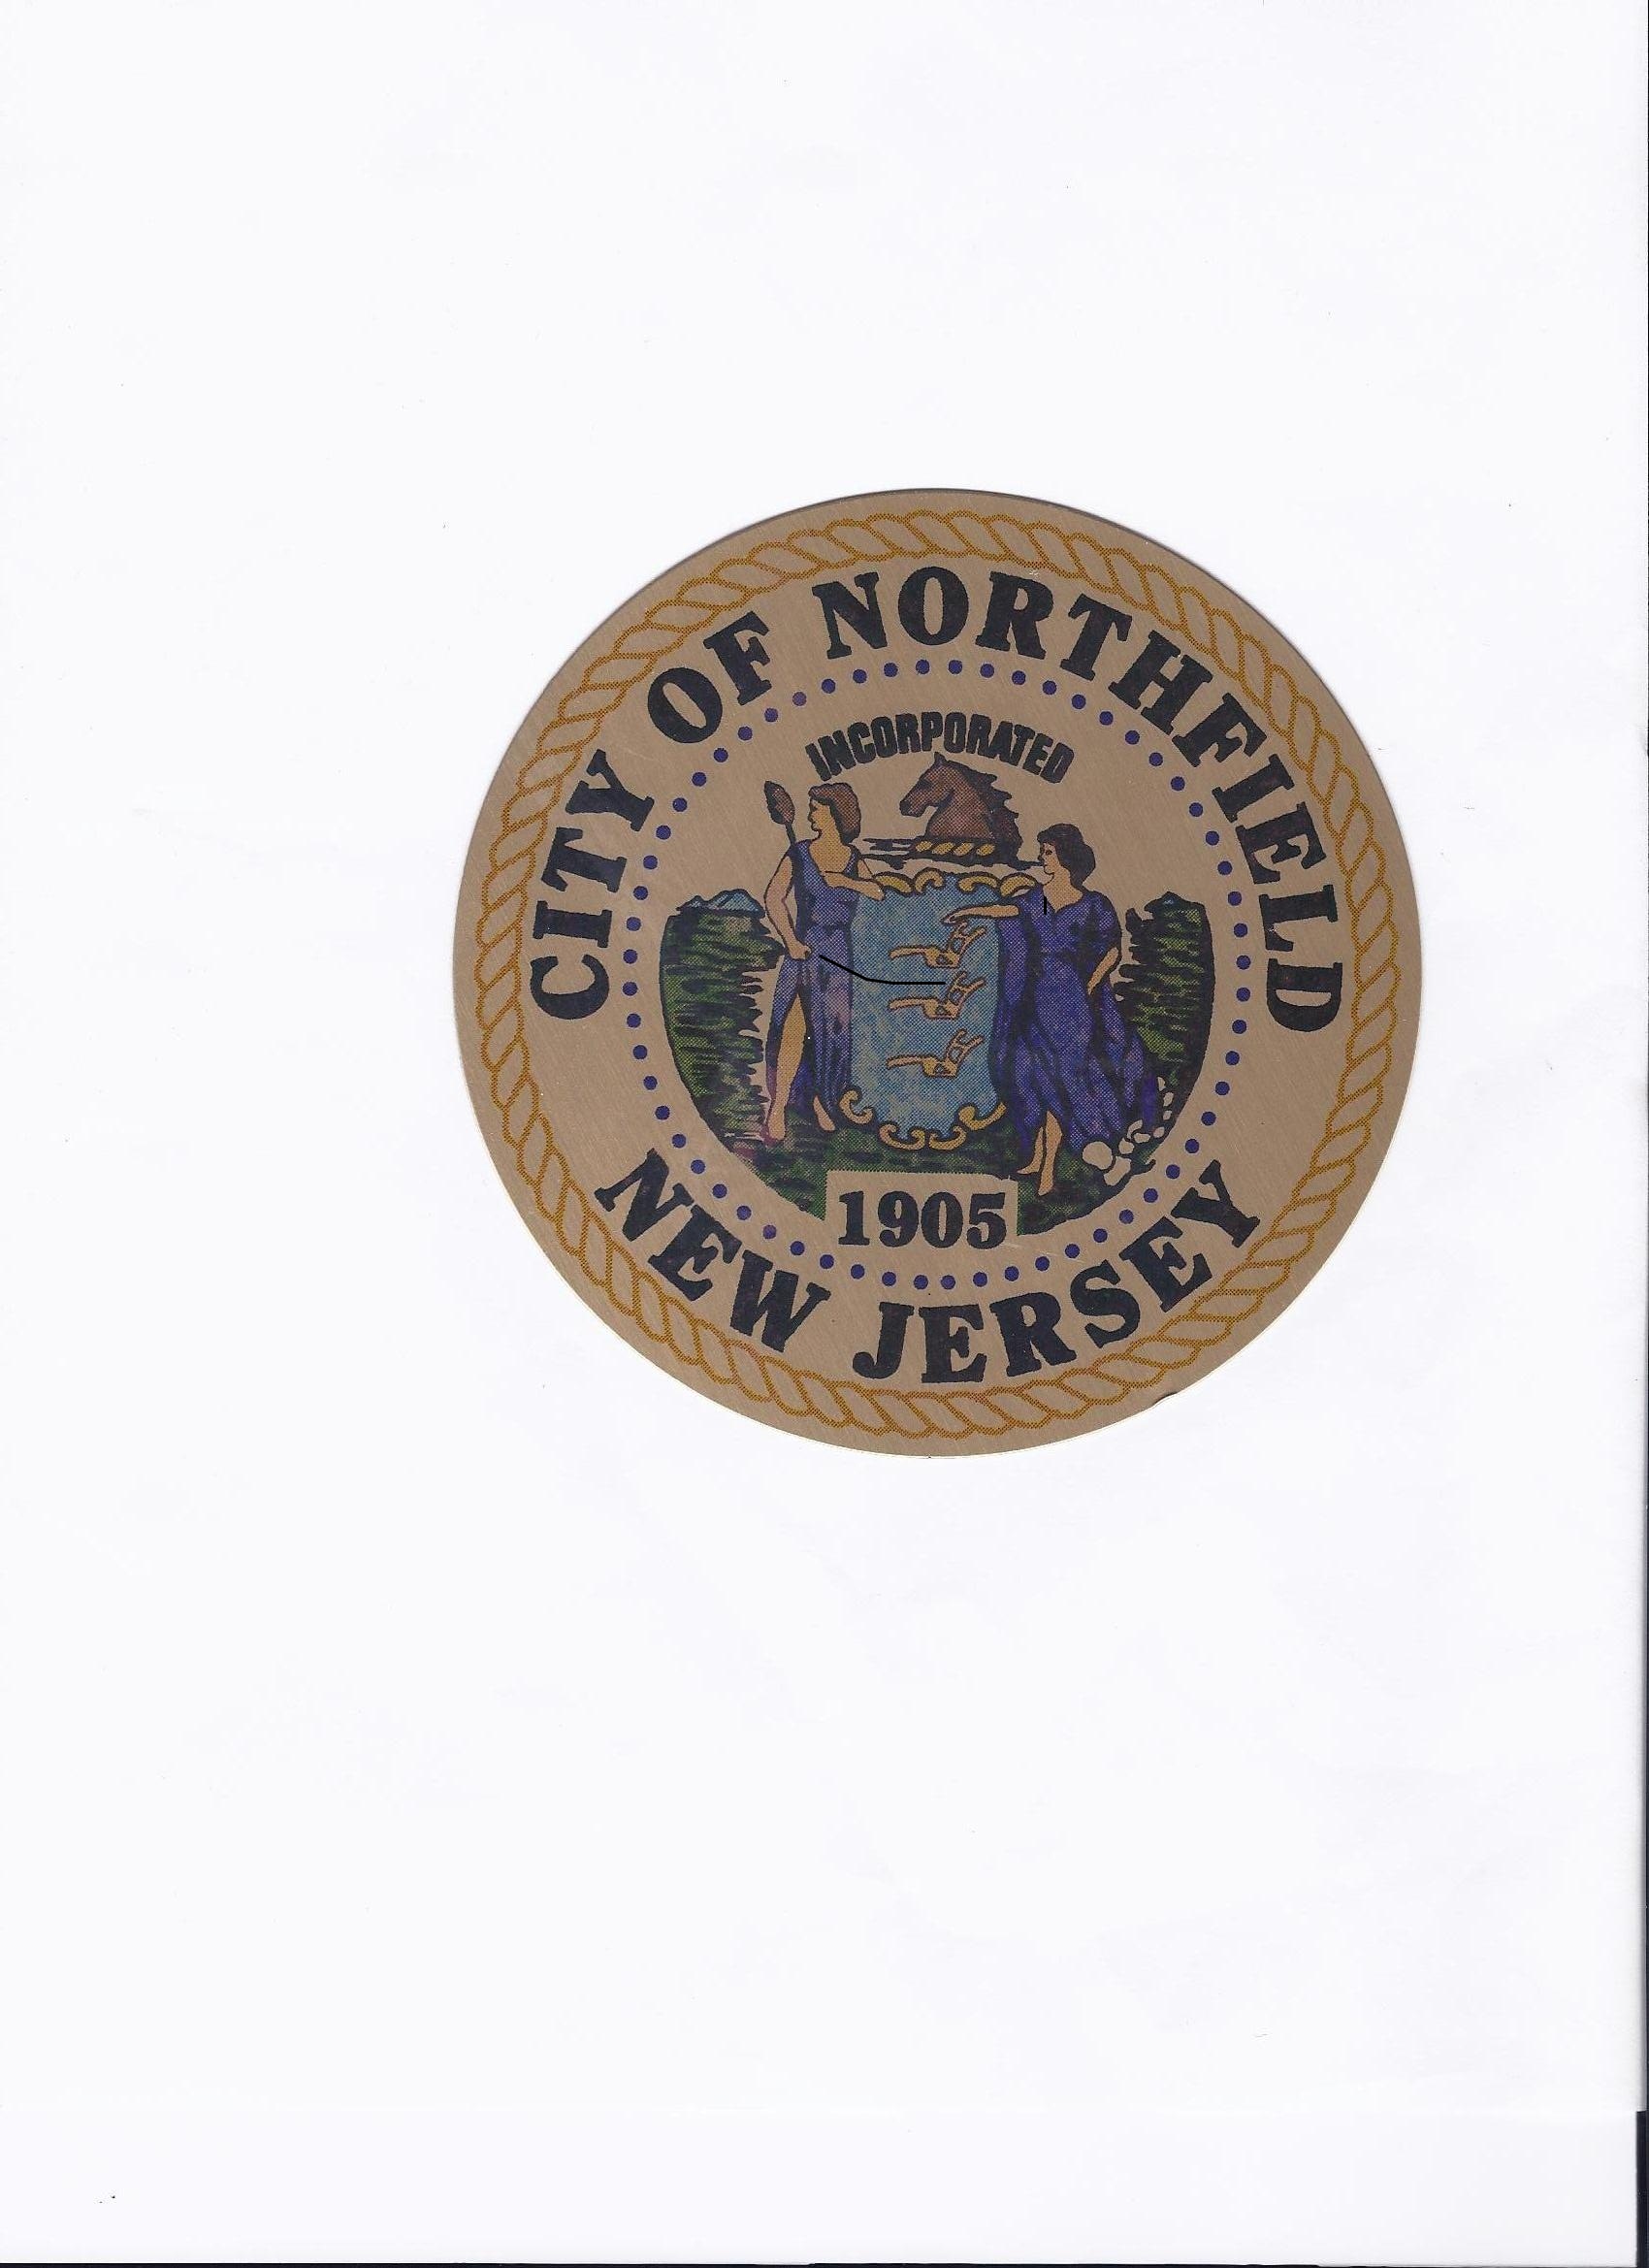 City of Northfield - Veterans Park